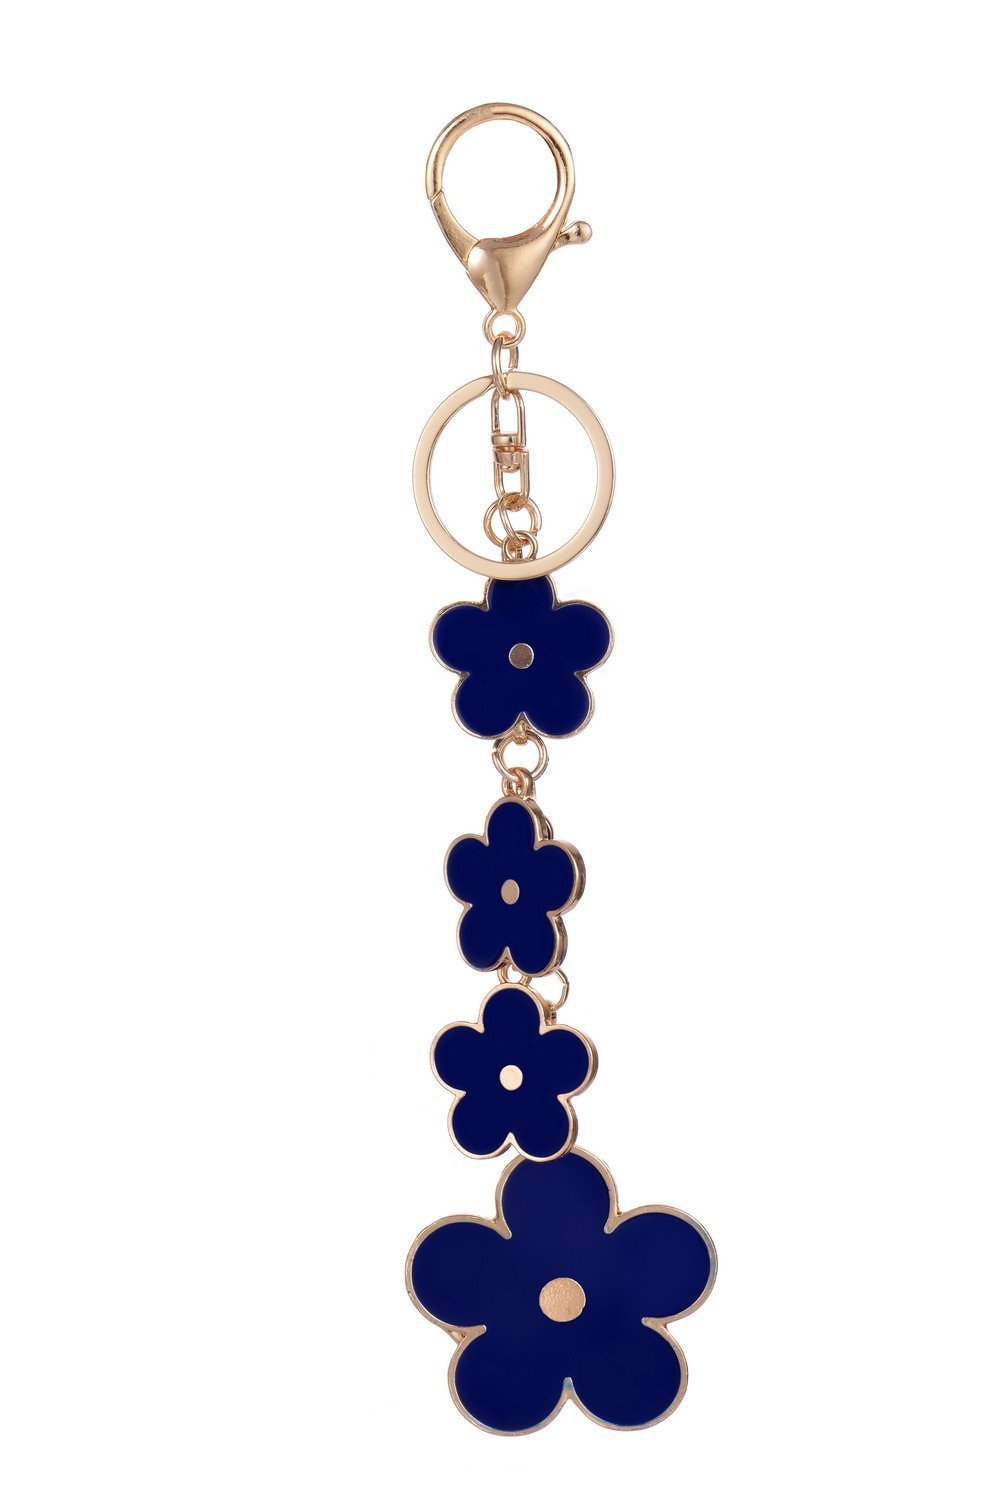 [Australia] - Giftale Women's Flower Bag Charms Enameled Keychain Purse Accessories Blue 